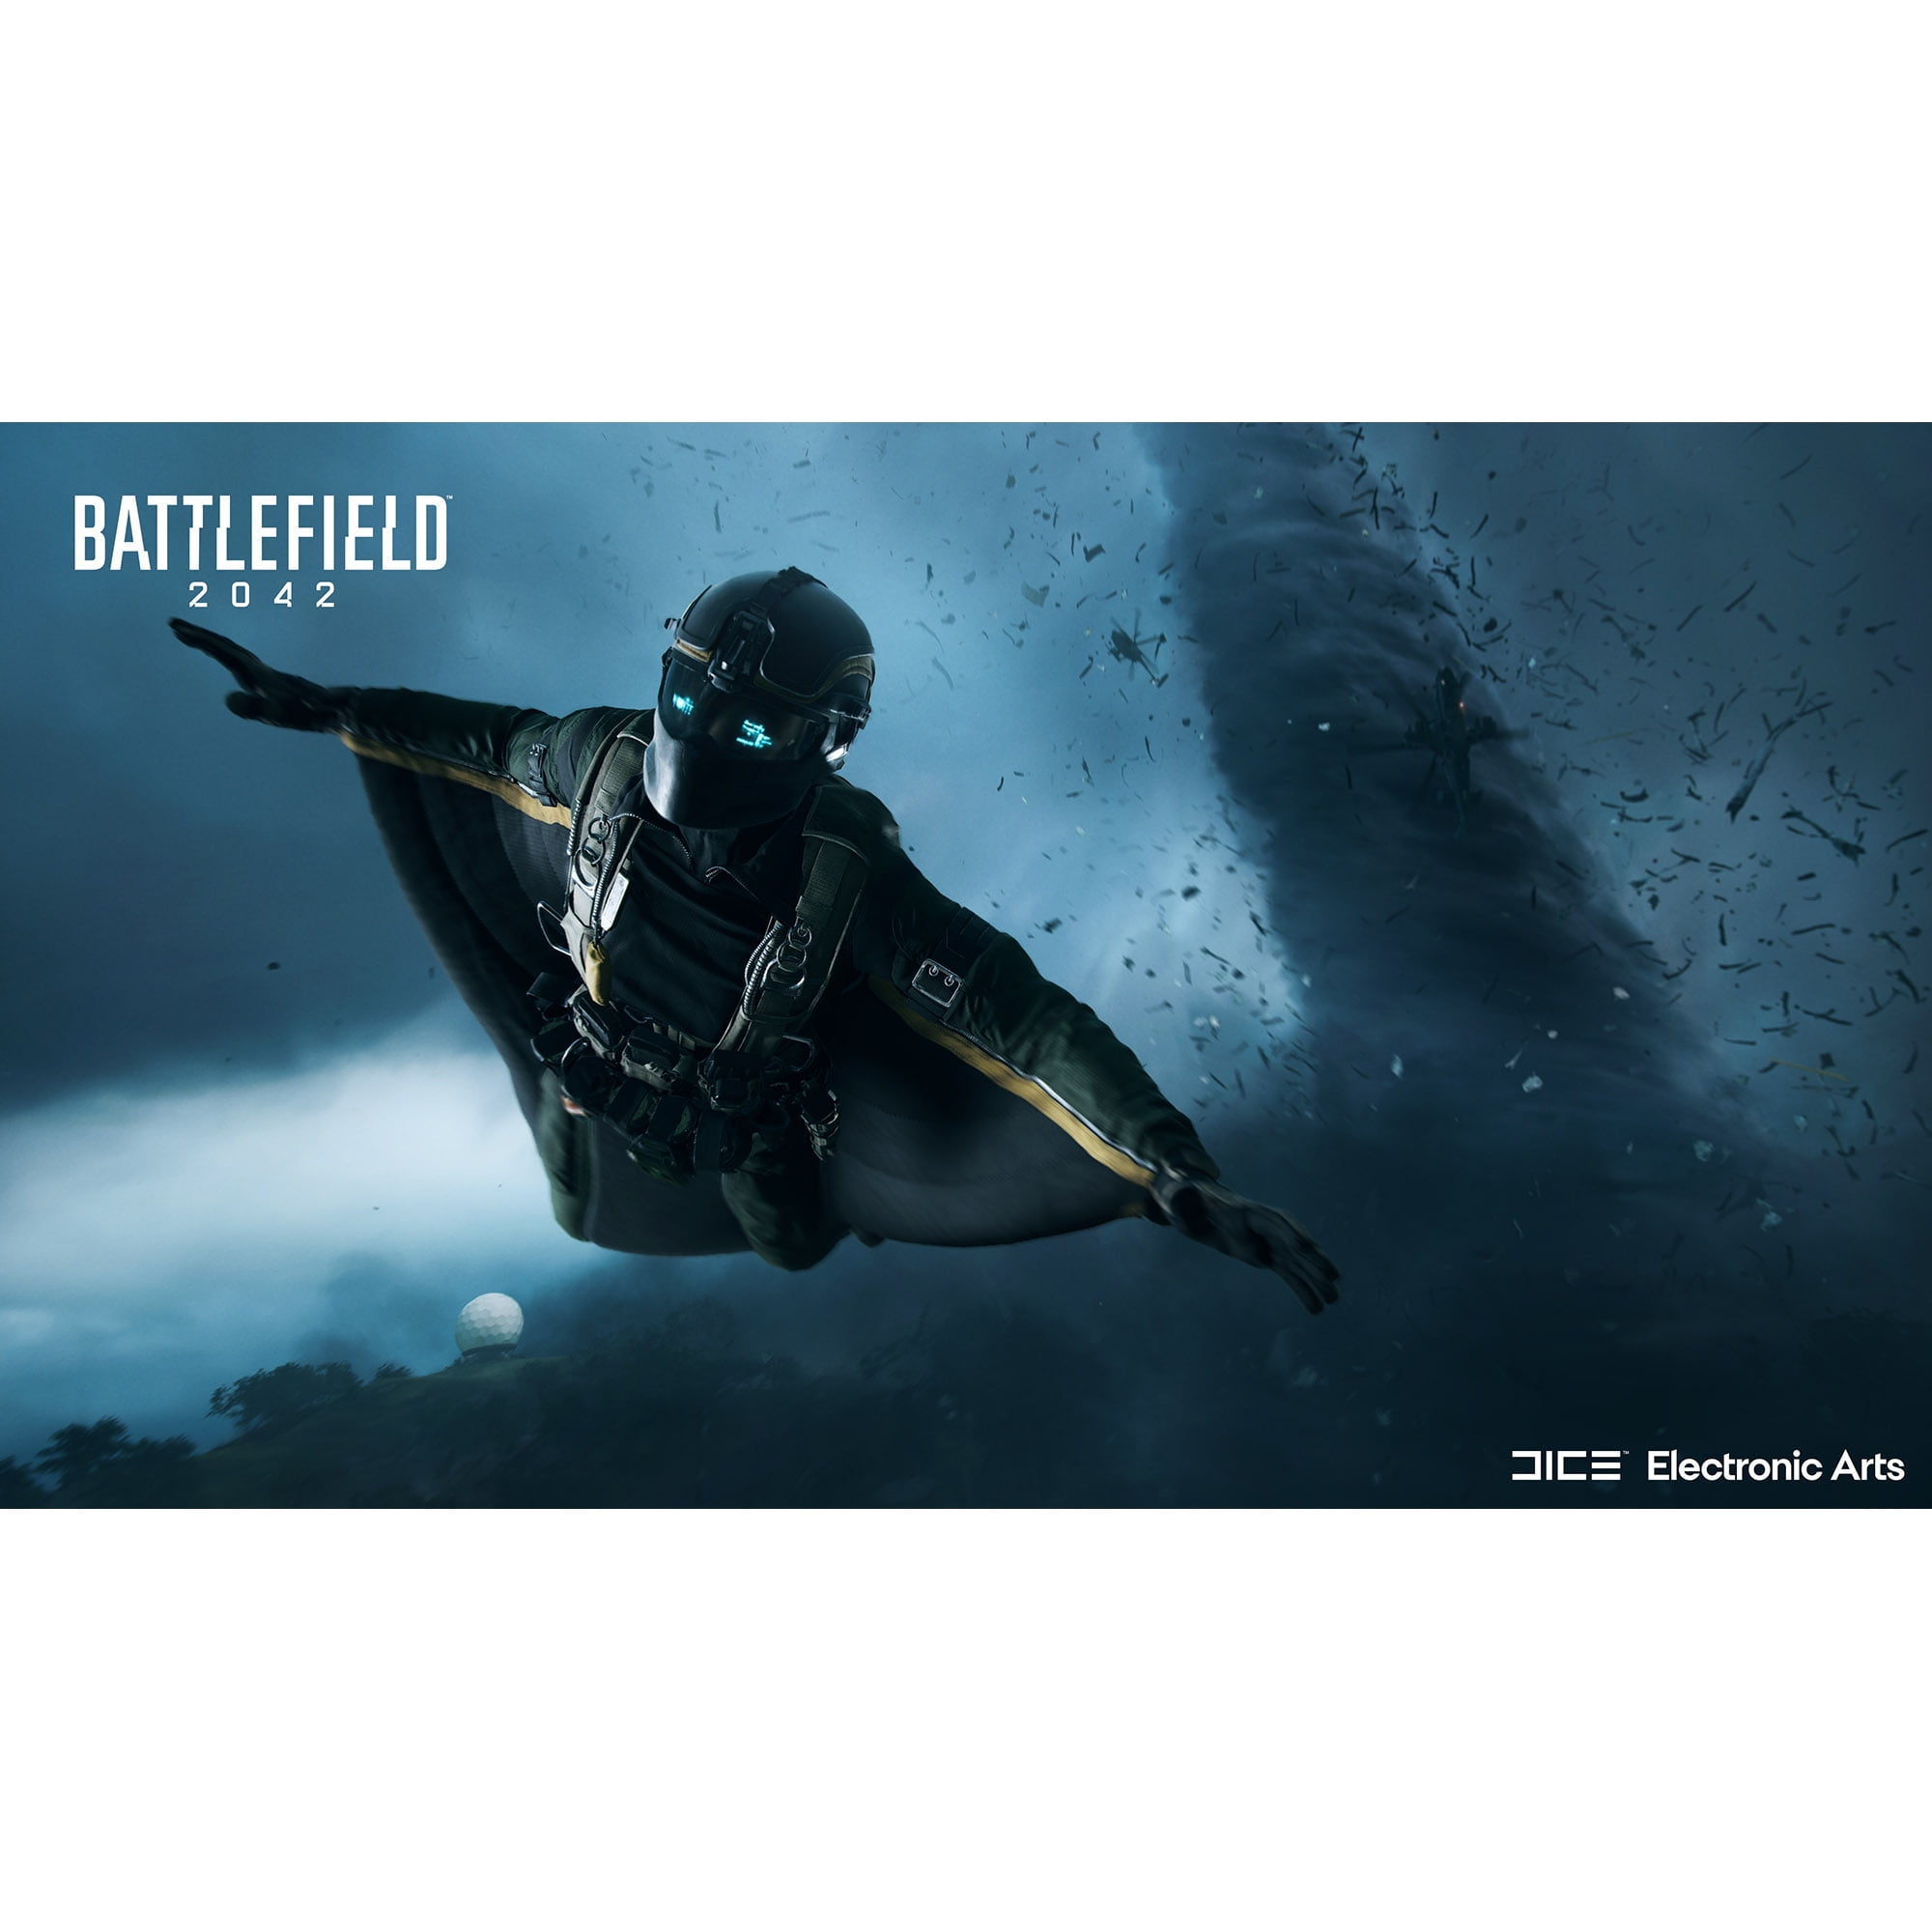 2042 ps4. Battlefield 2042 Xbox Series x. Battlefield™ 2042 ps5™. Battlefield 2042 Ultimate Edition.